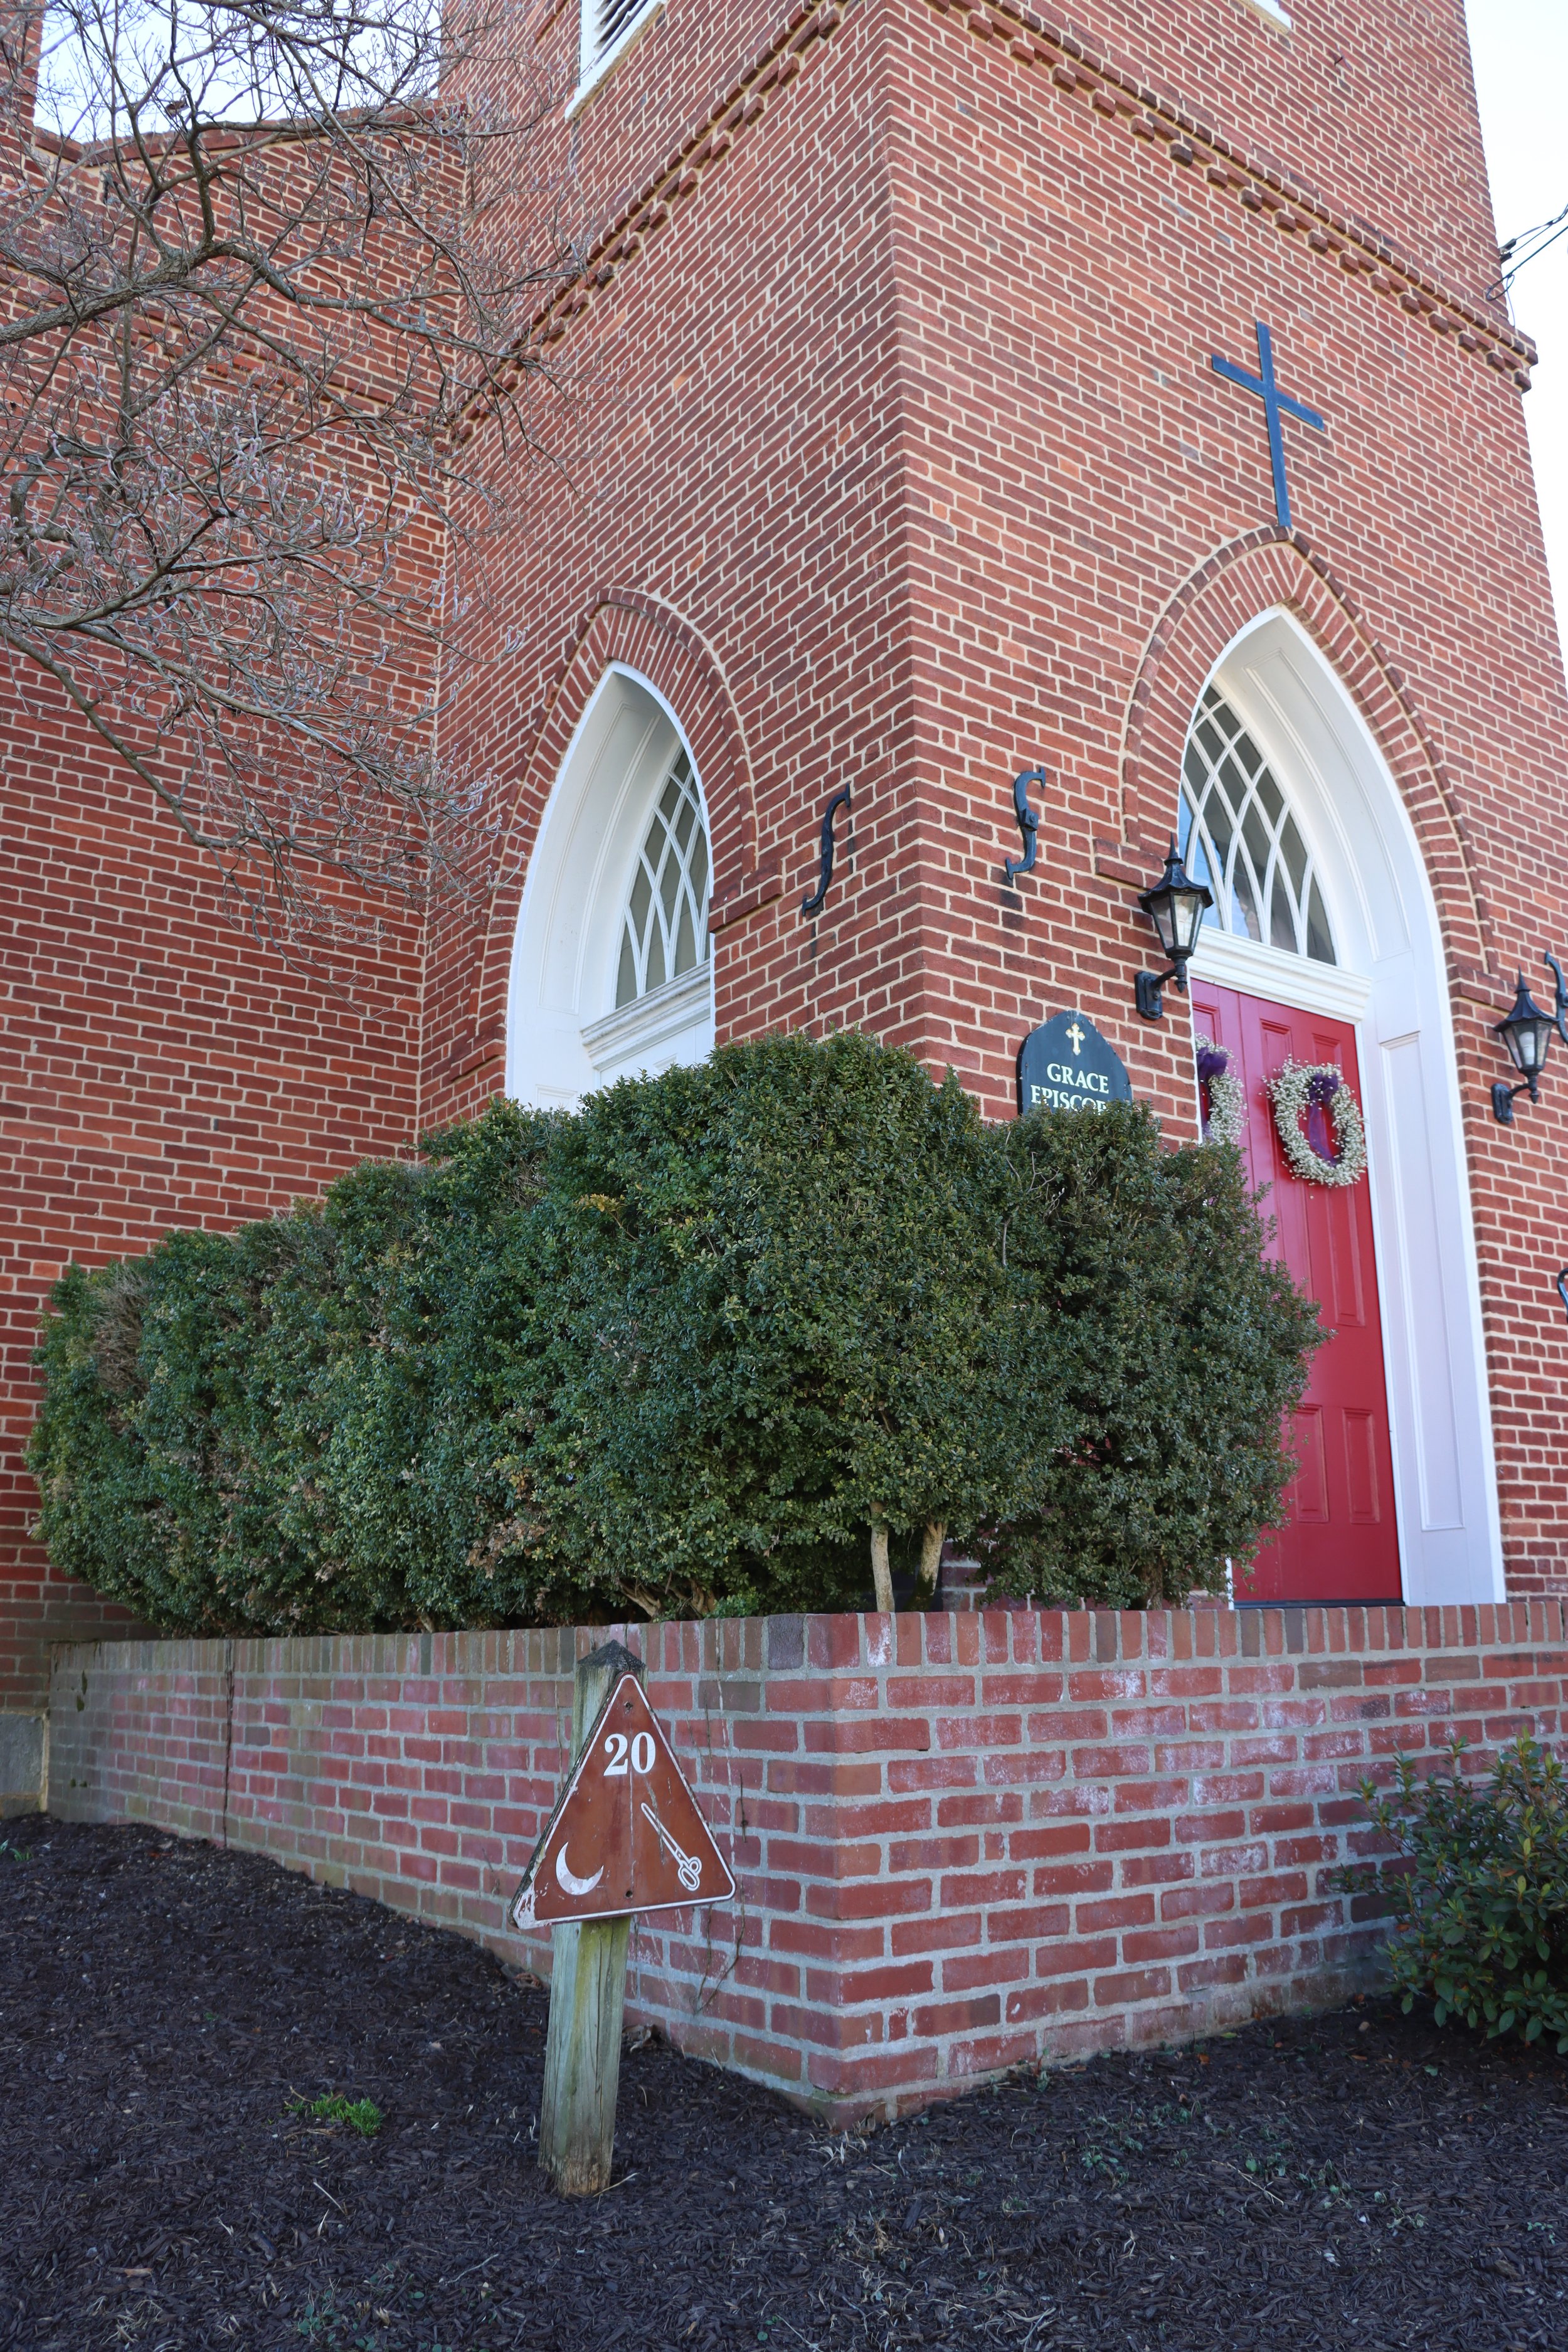   Grace Episcopal Church, Middleway, West Virginia  